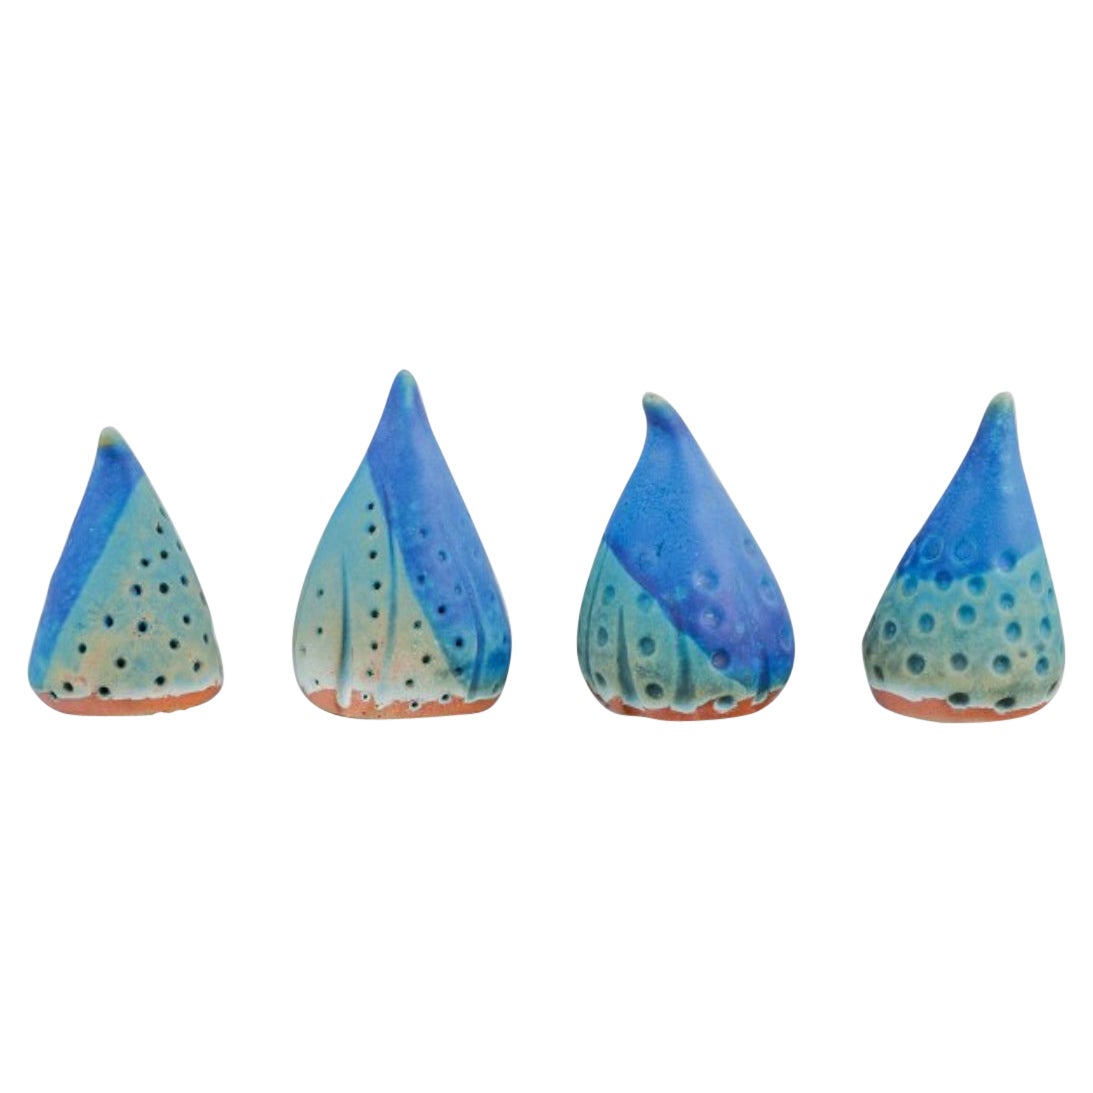 Linda Mathison. Four small ceramic sculptures in turquoise glaze.